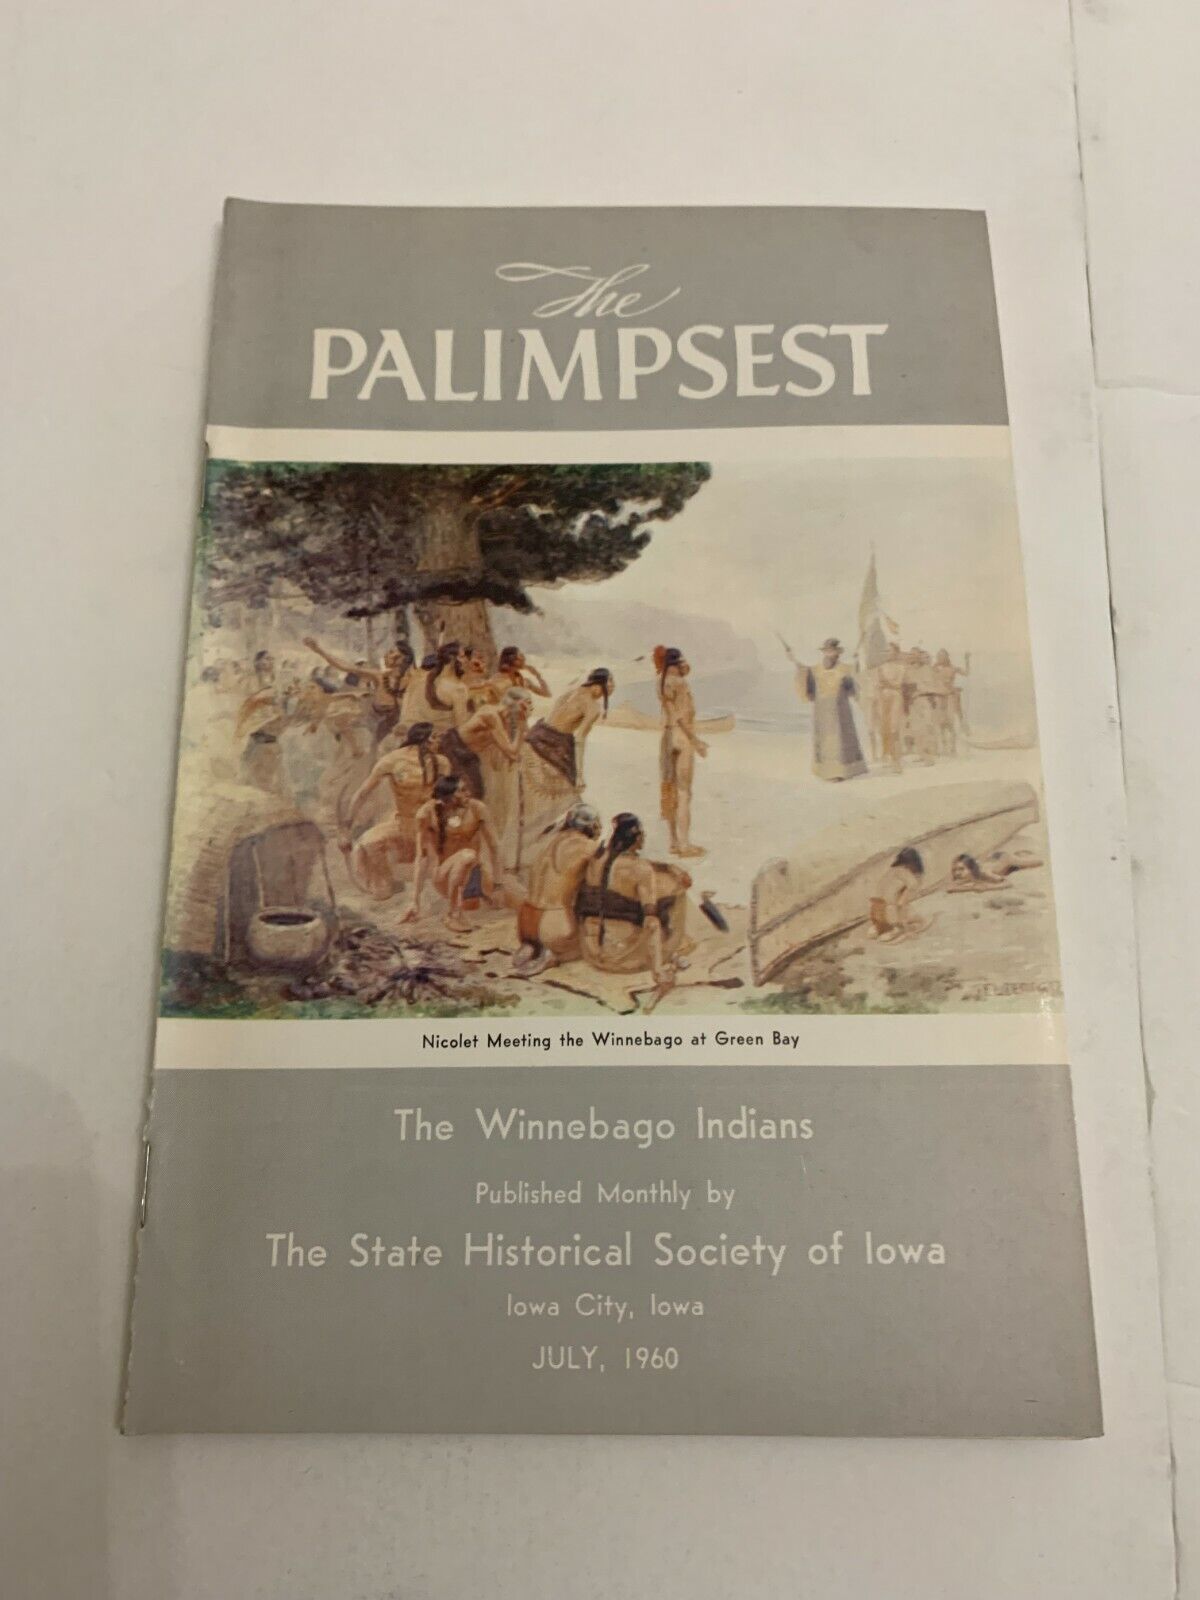 July 1960 The Palimpsest Magazine Historical Society Iowa The Winnebago Indians